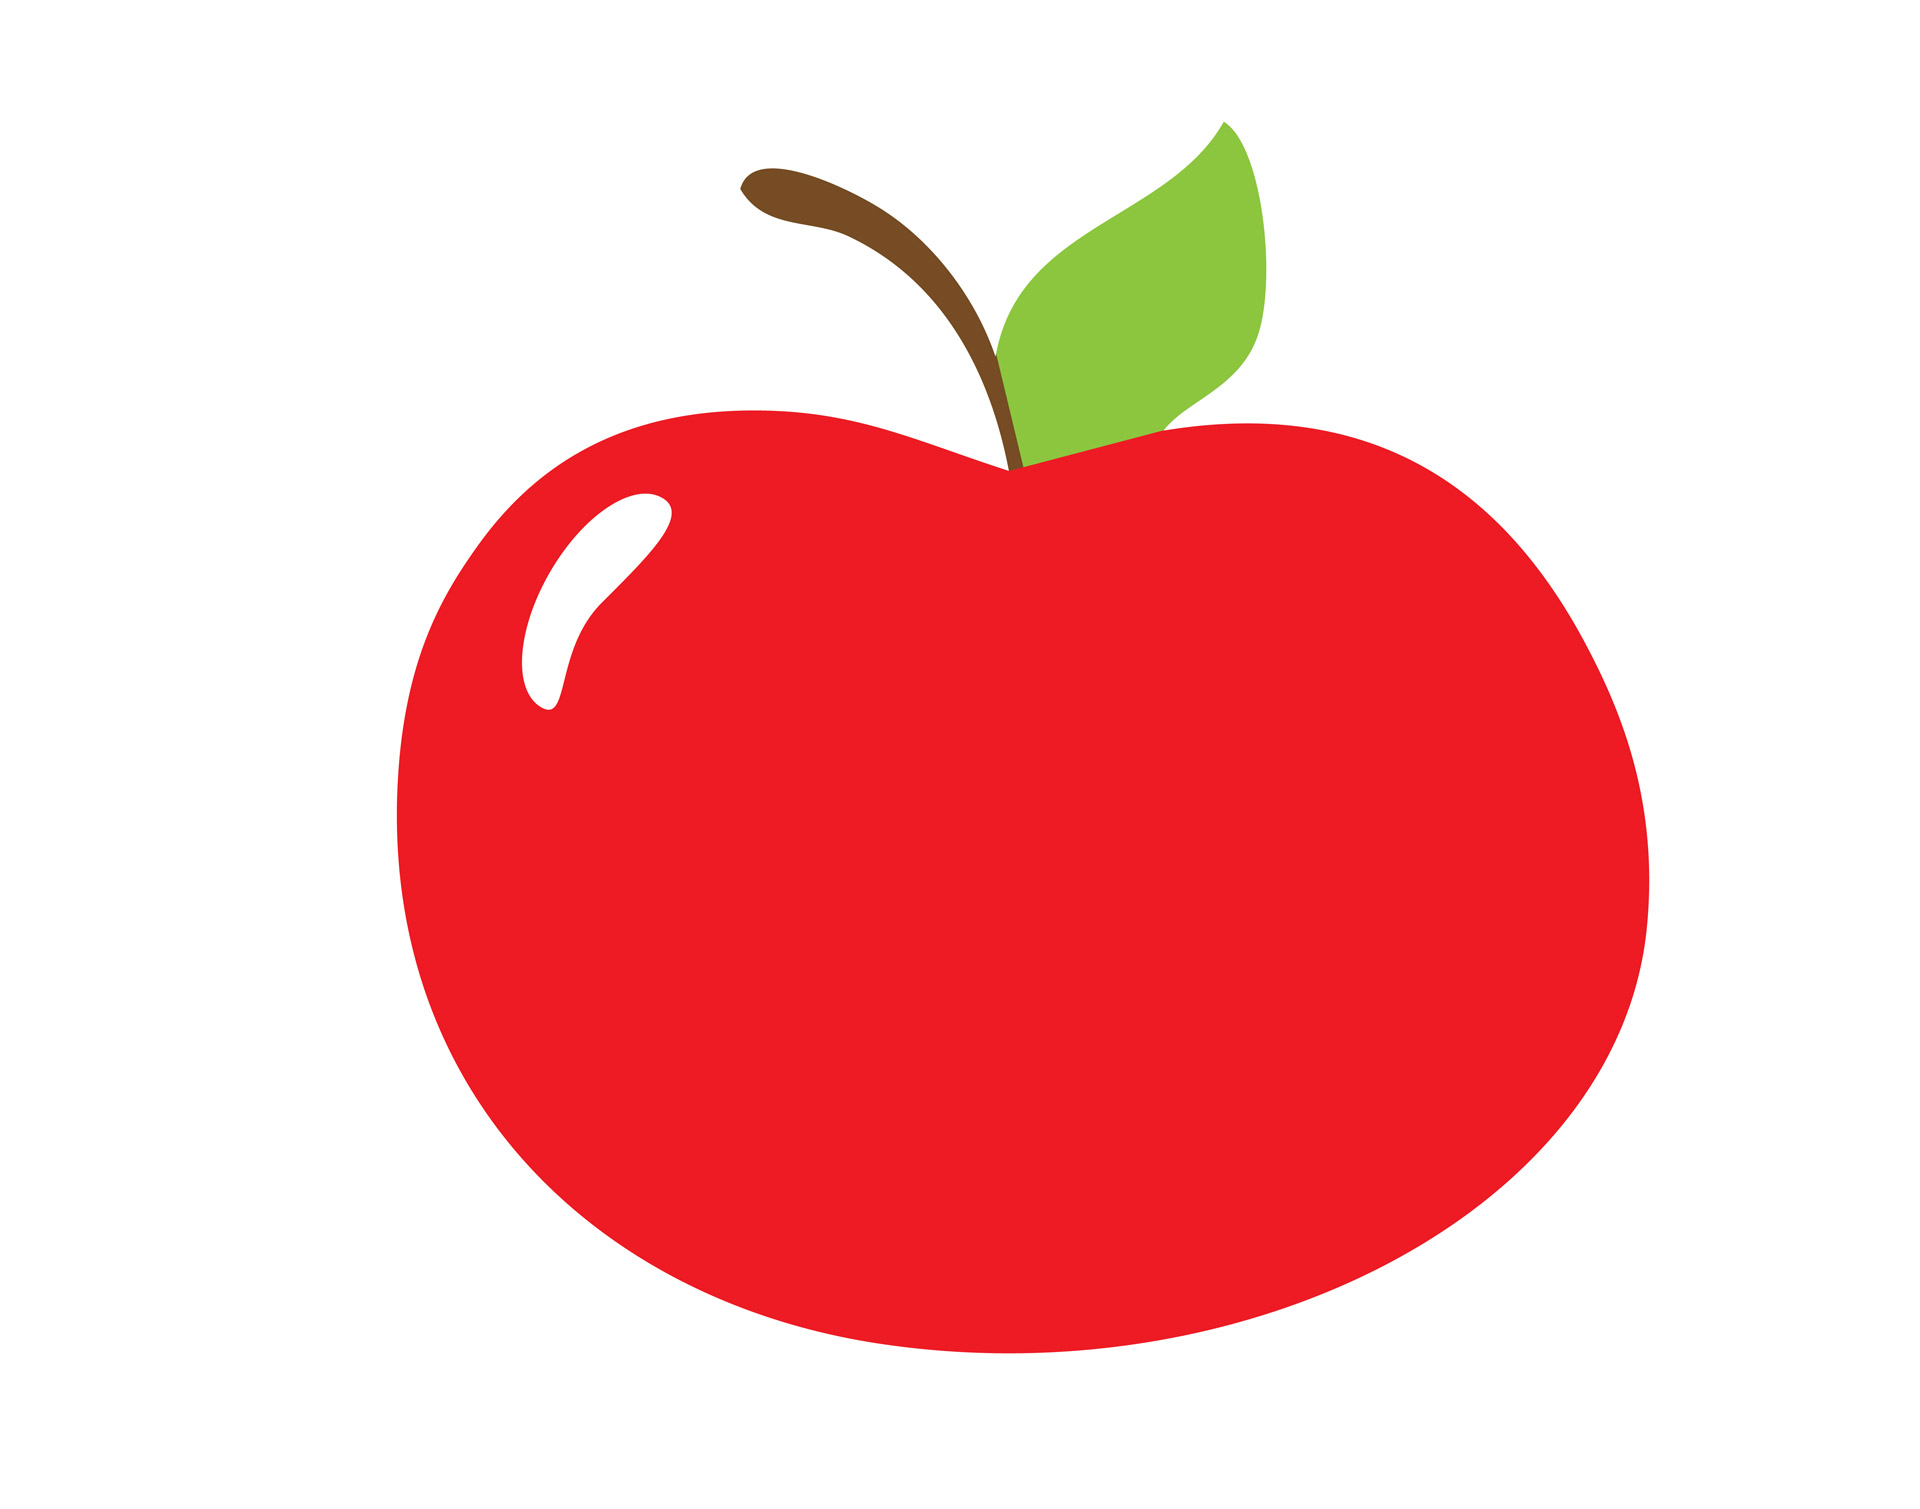 Clip art of apple